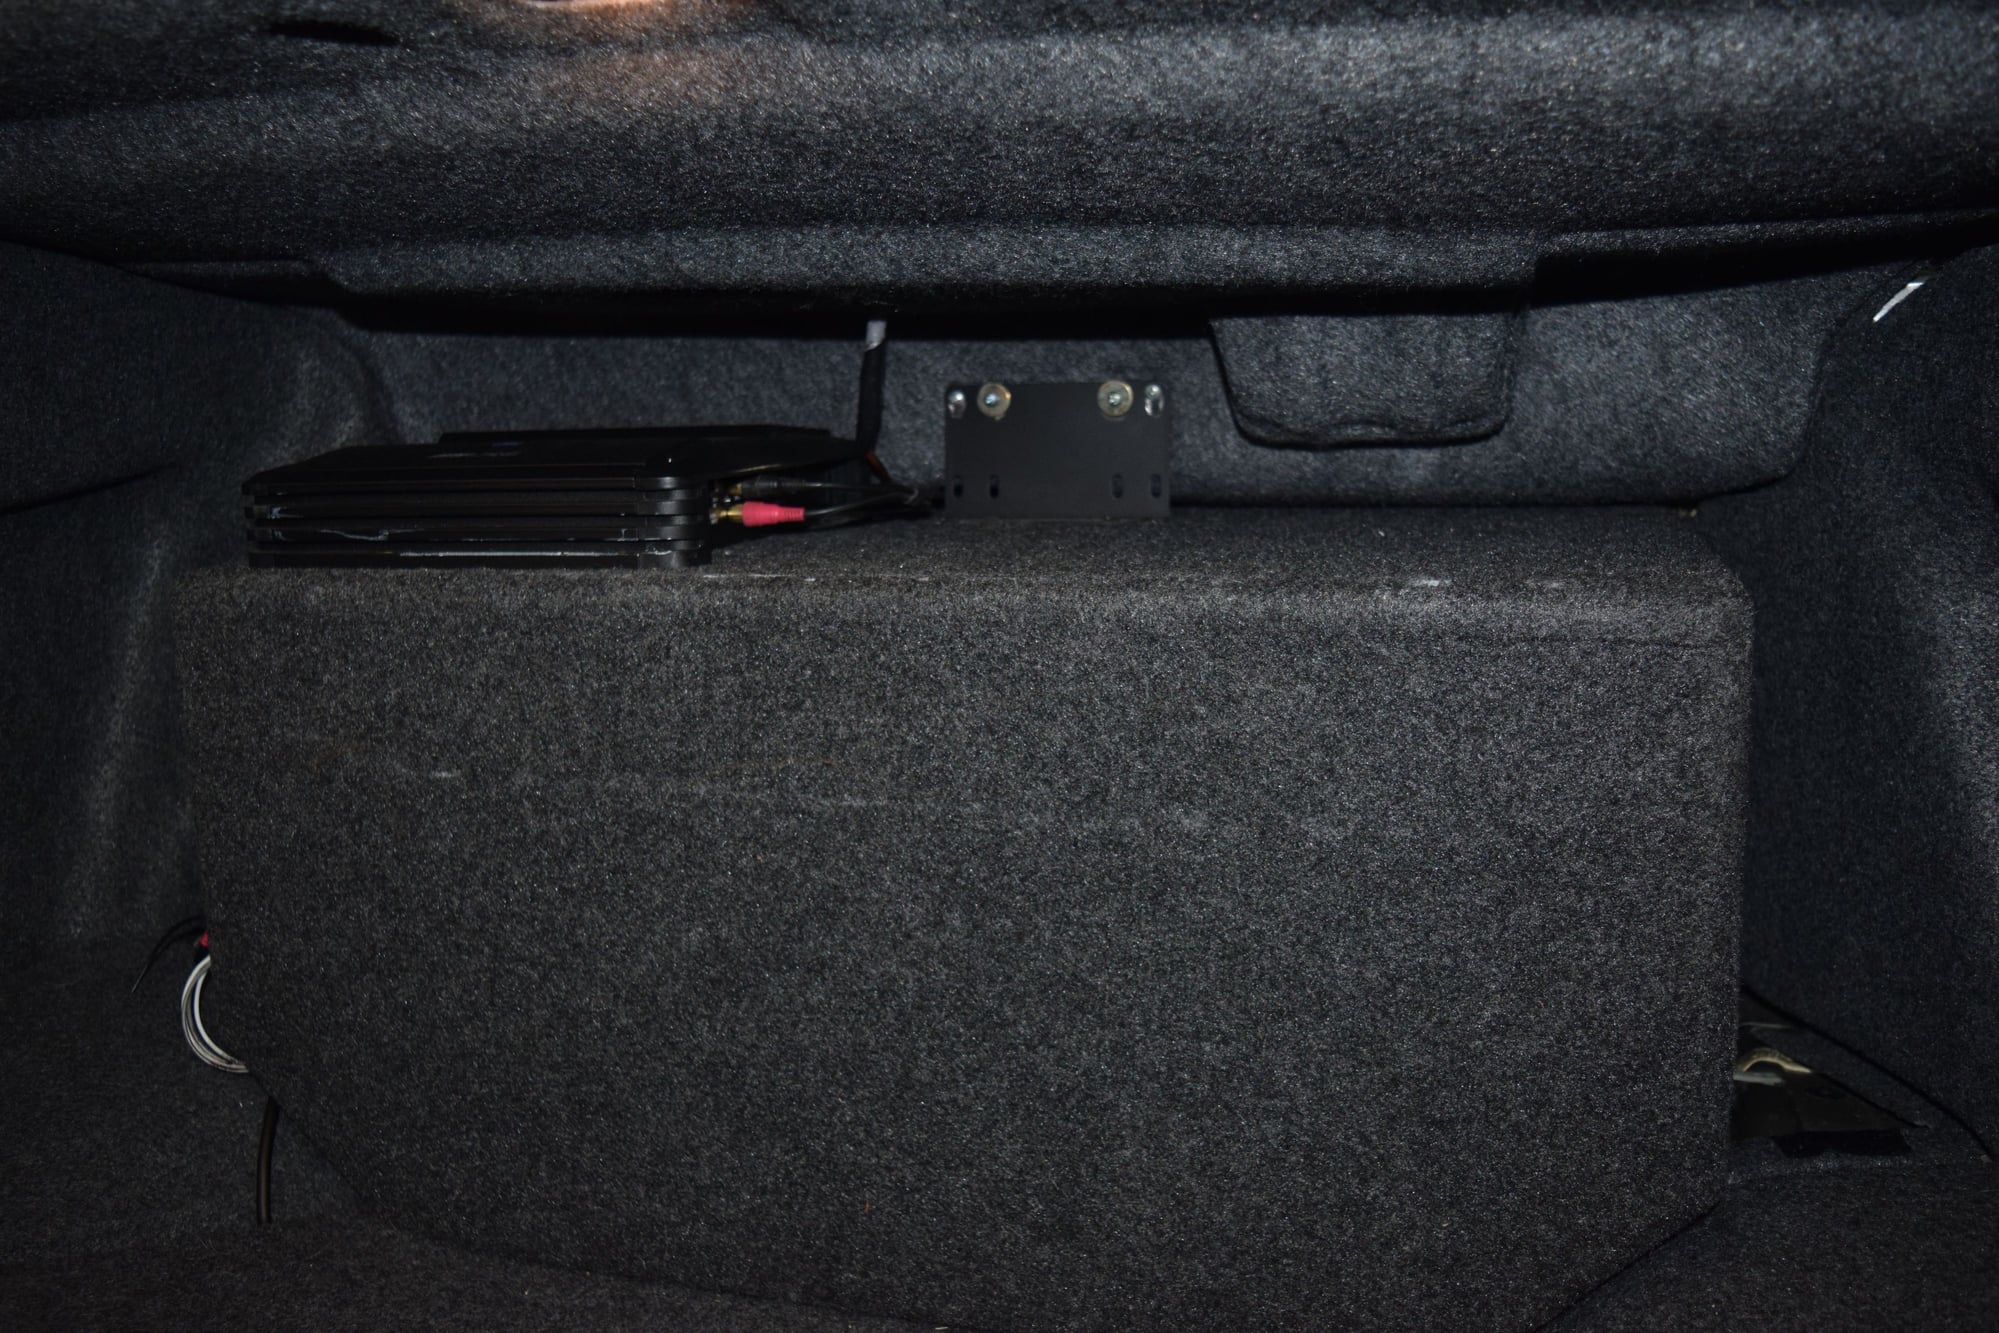 Audio Video/Electronics - FS: Custom box / sub / amp / LOC - Used - 2009 to 2014 Acura TL - Orlando, FL 32824, United States